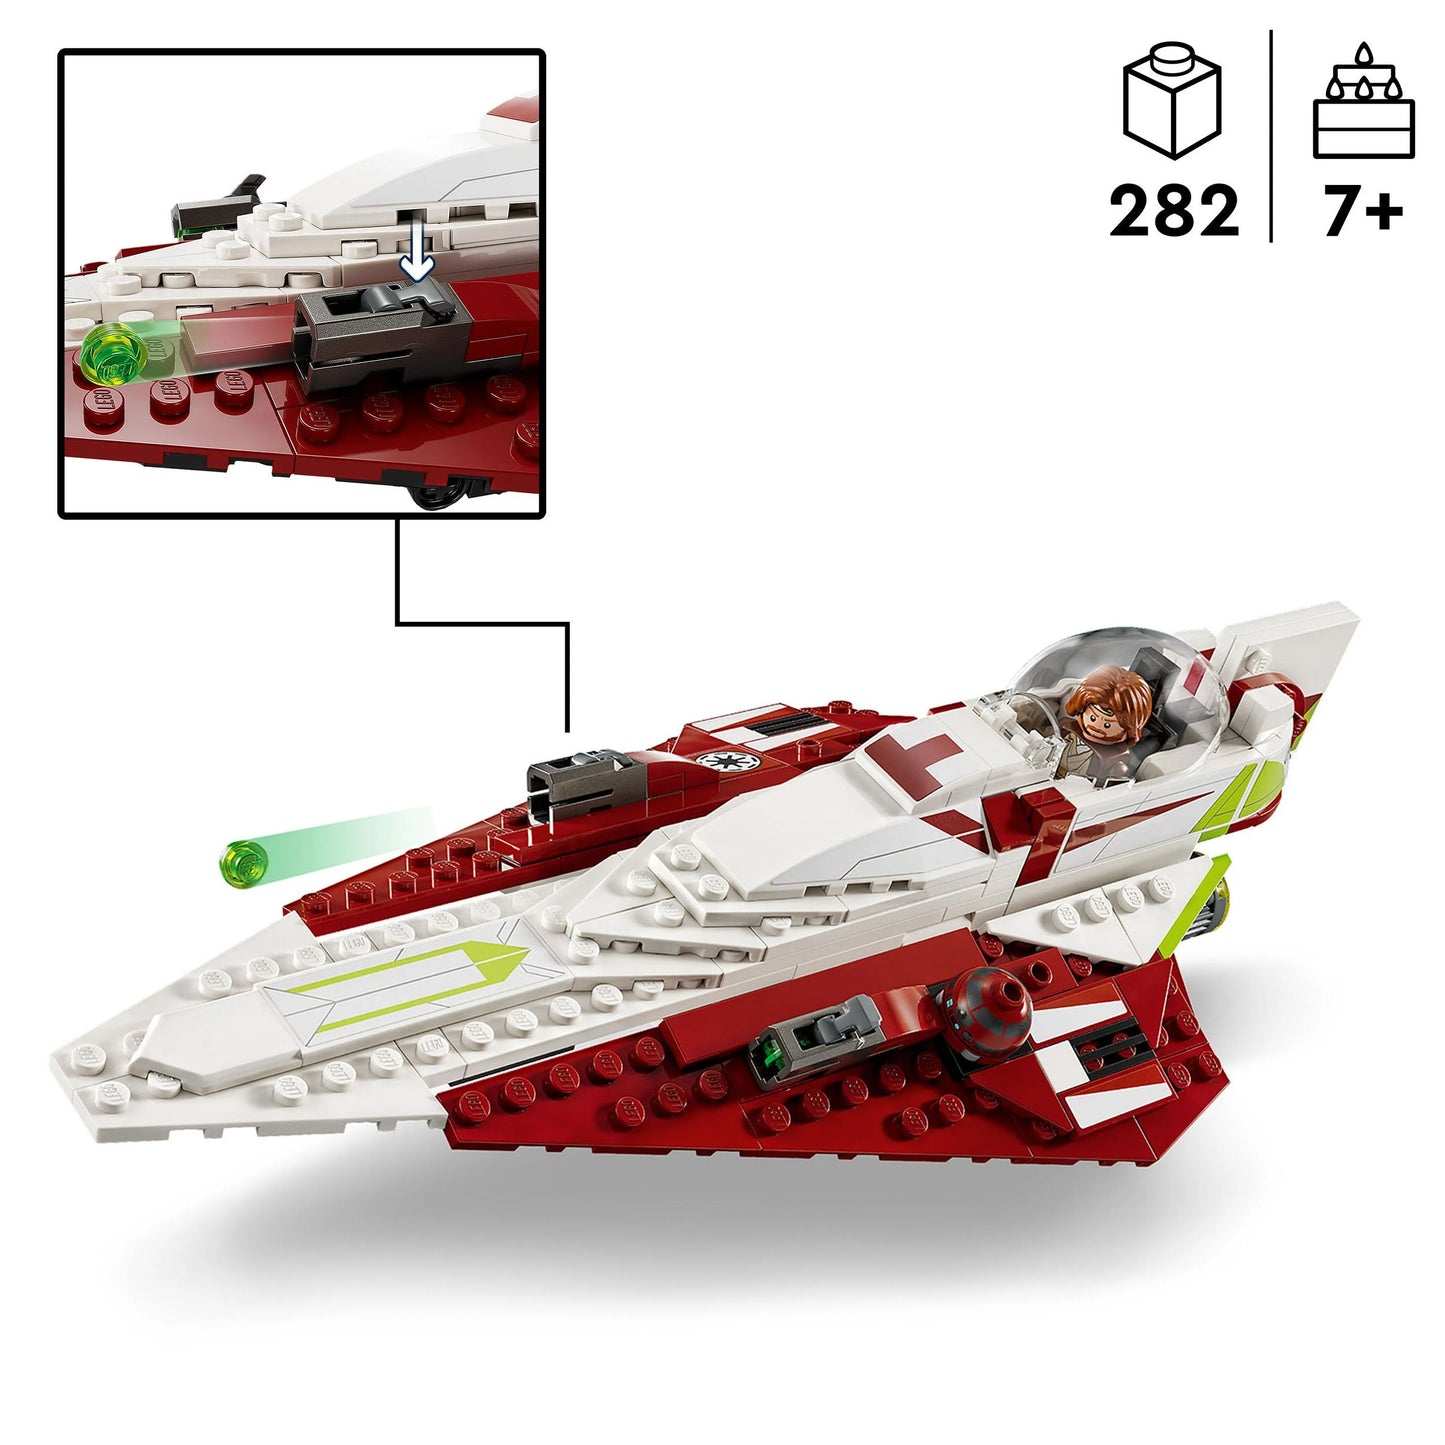 The Jedi Starfighter from Obi-Wan Kenobi - LEGO Star Wars